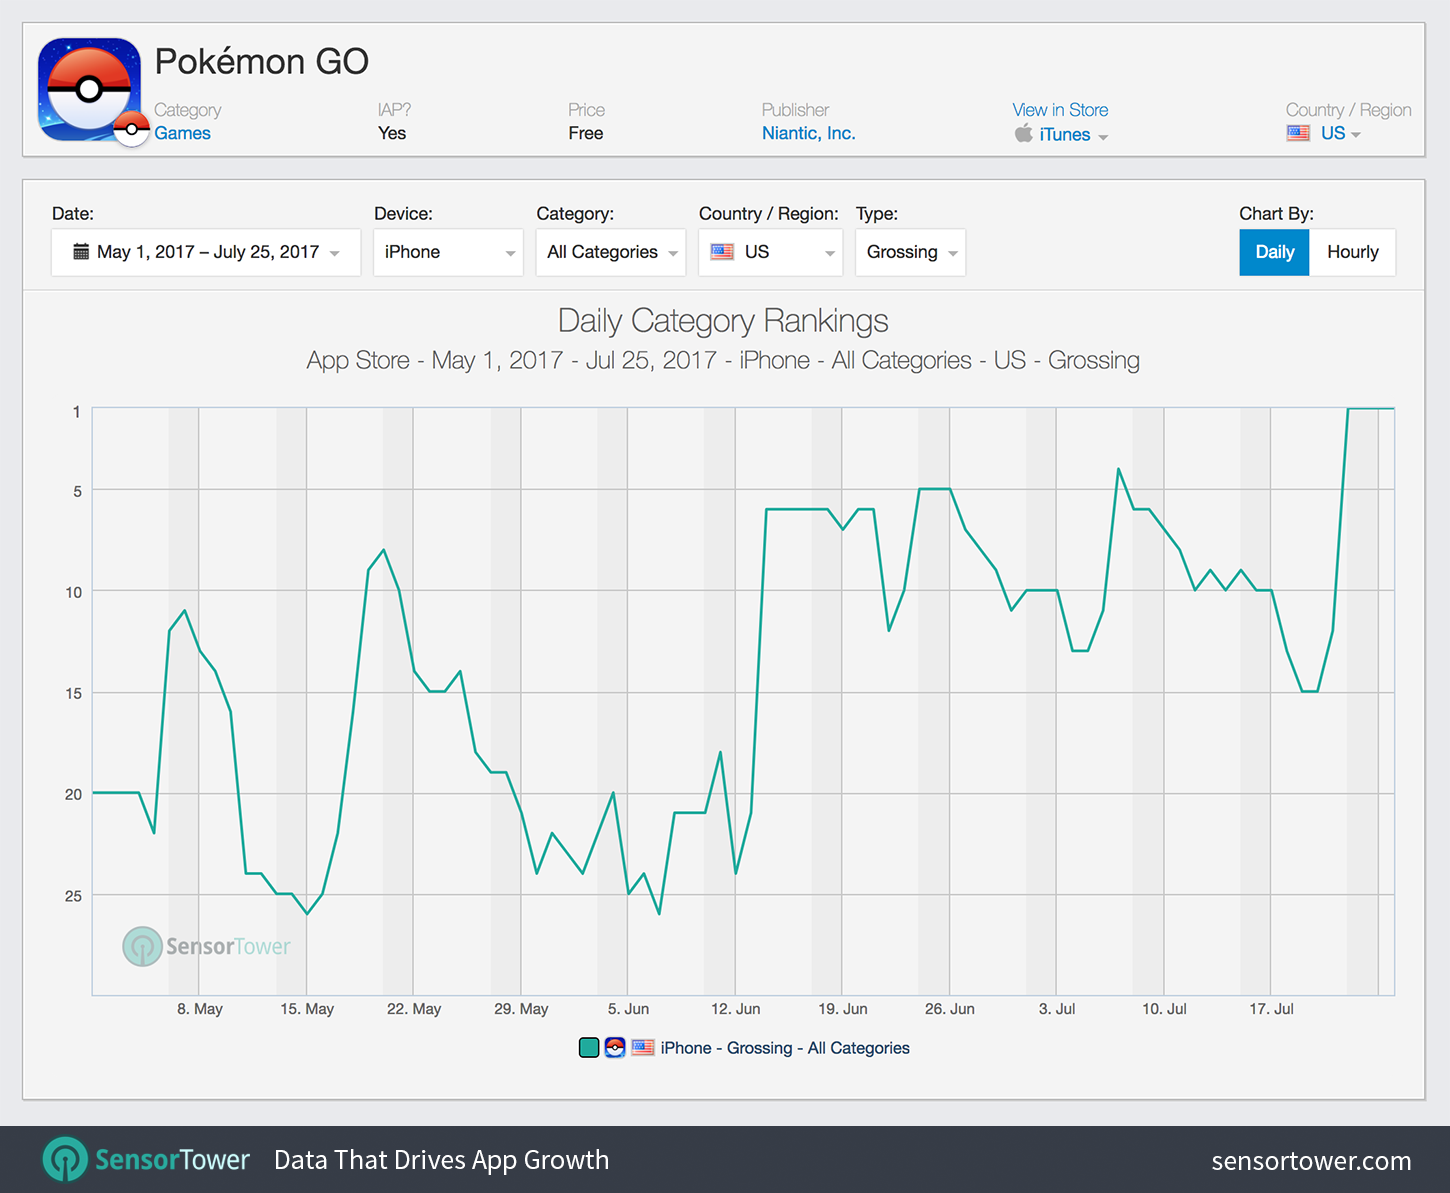 Pokemon Go U.S. iPhone revenue ranking history since May 1, 2017